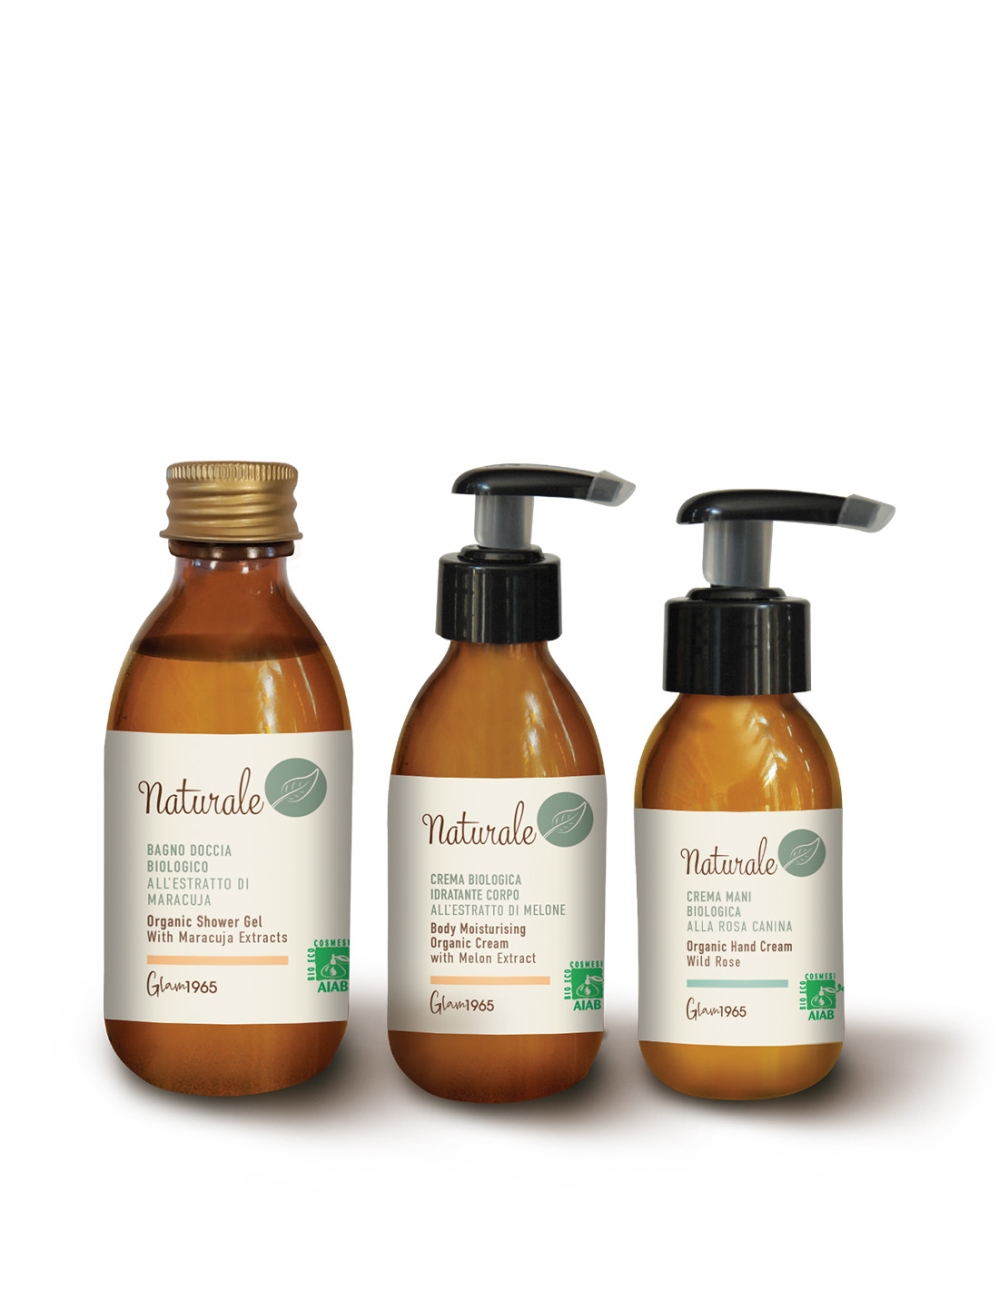 Organic shower gel + moisturizing body cream + hand cream | "Body Care" Gift Set